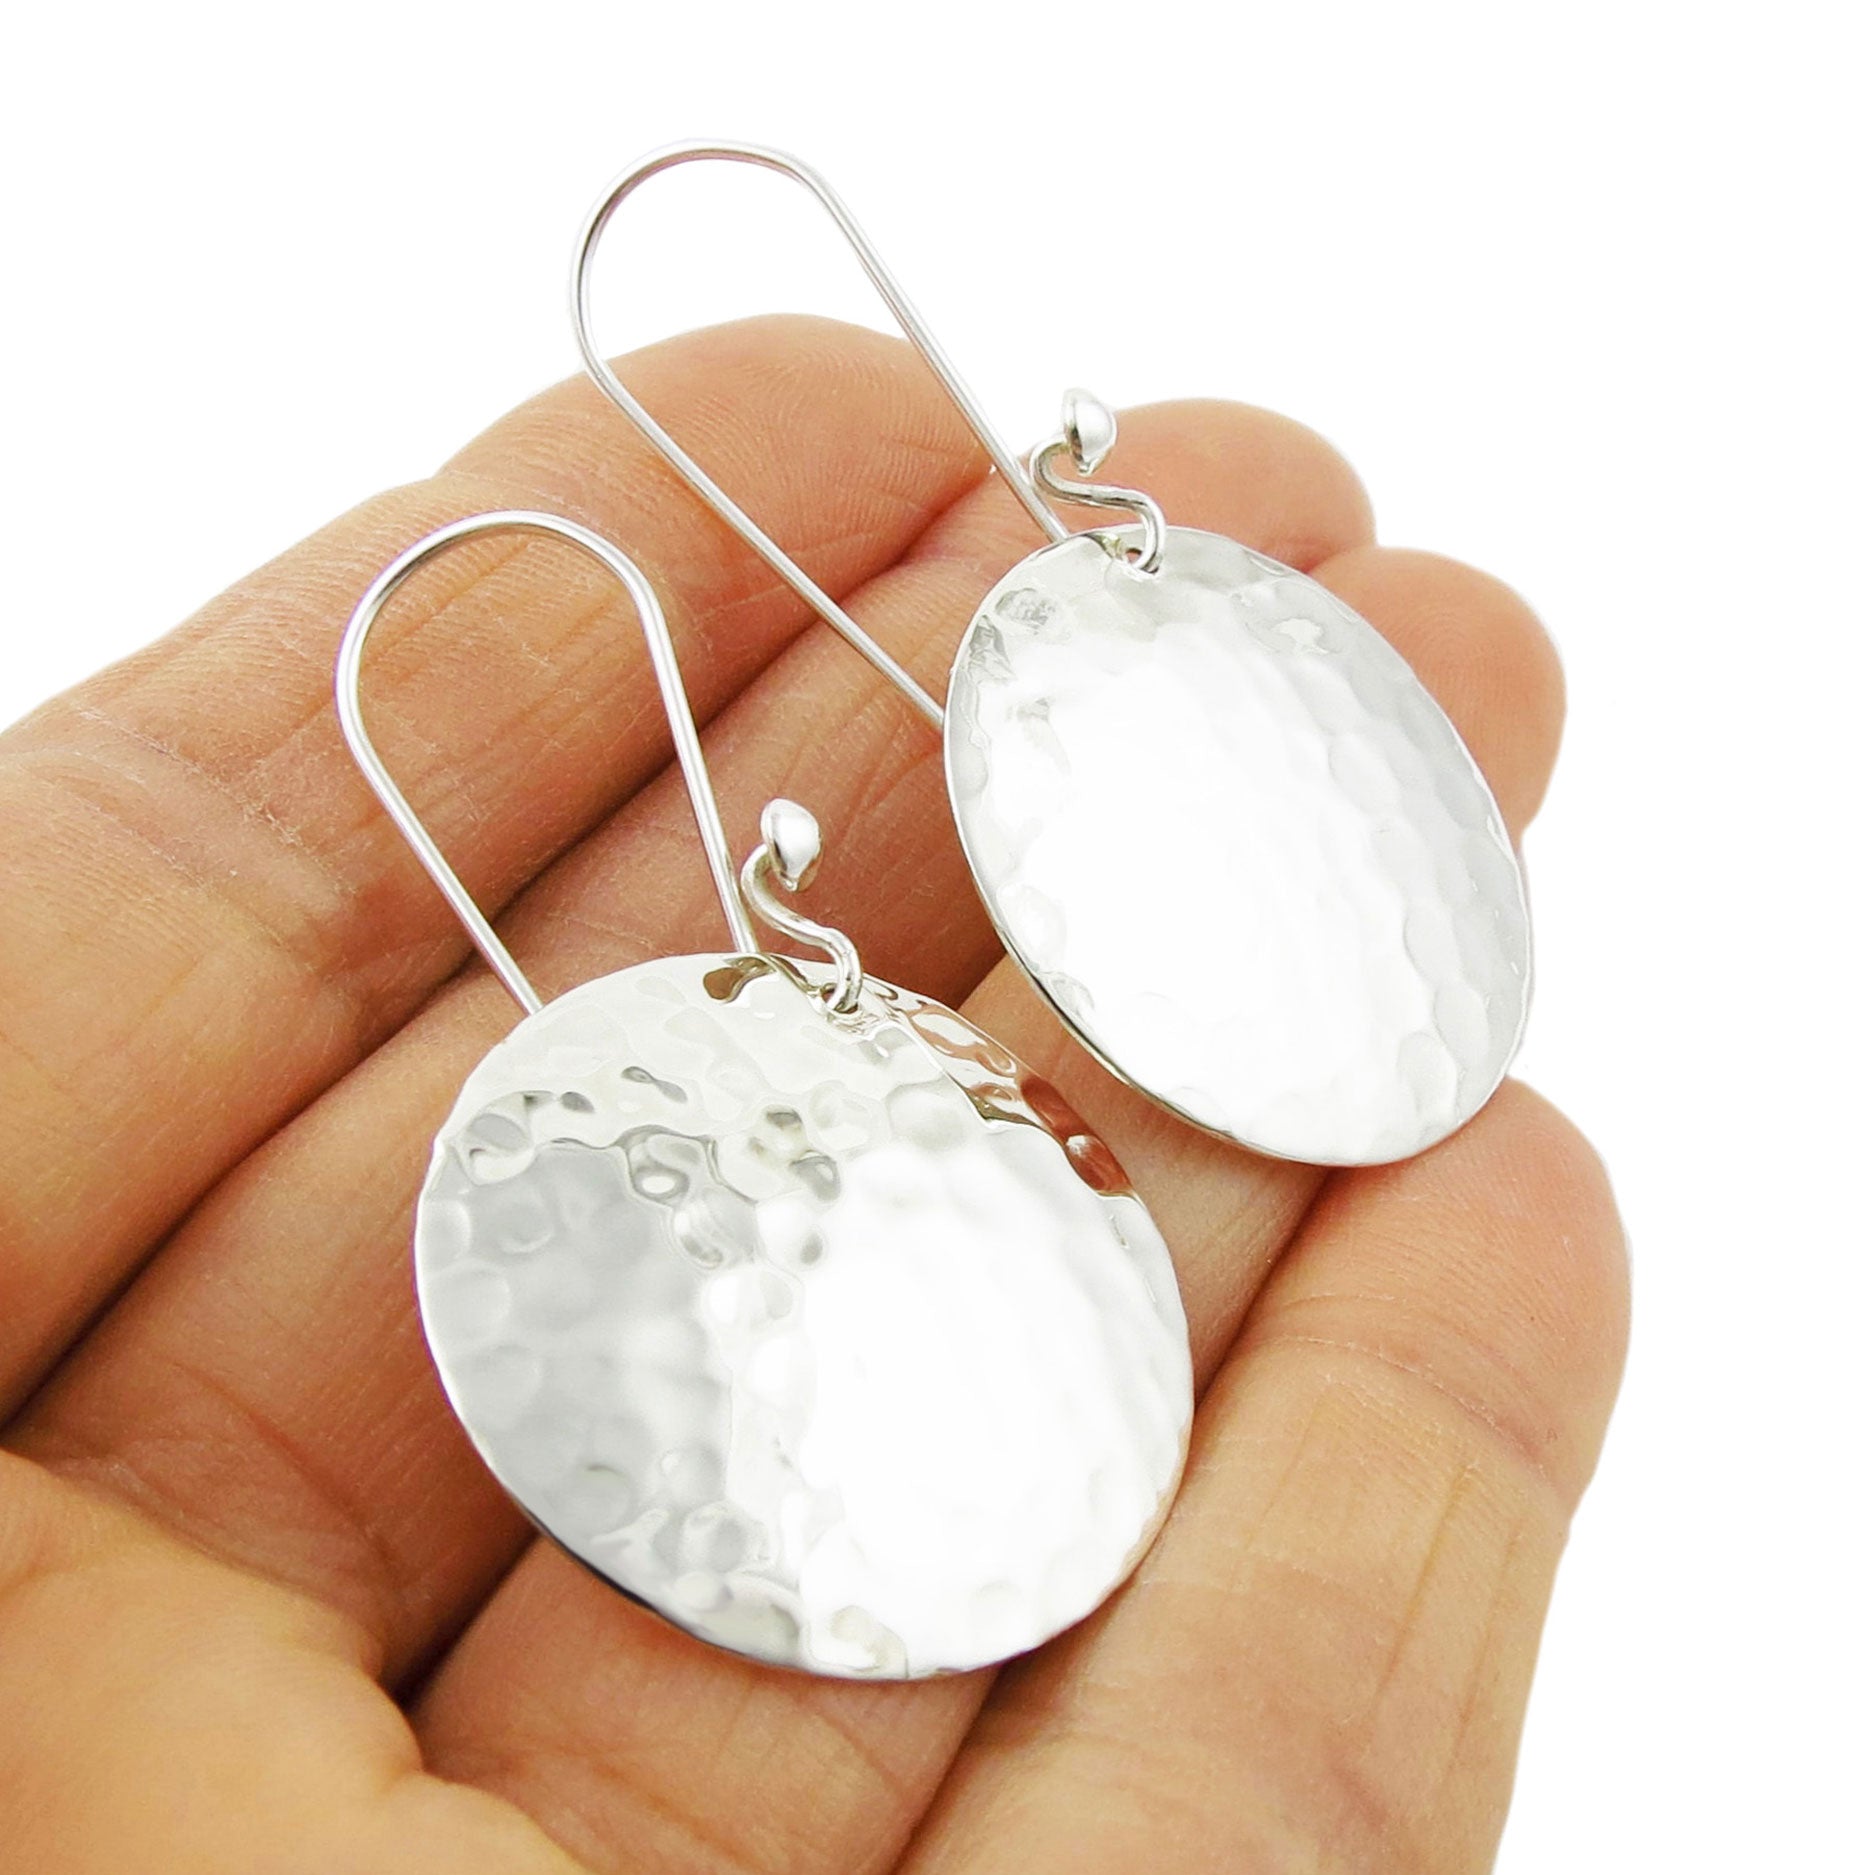 Beading hoop earrings with macramé pendants